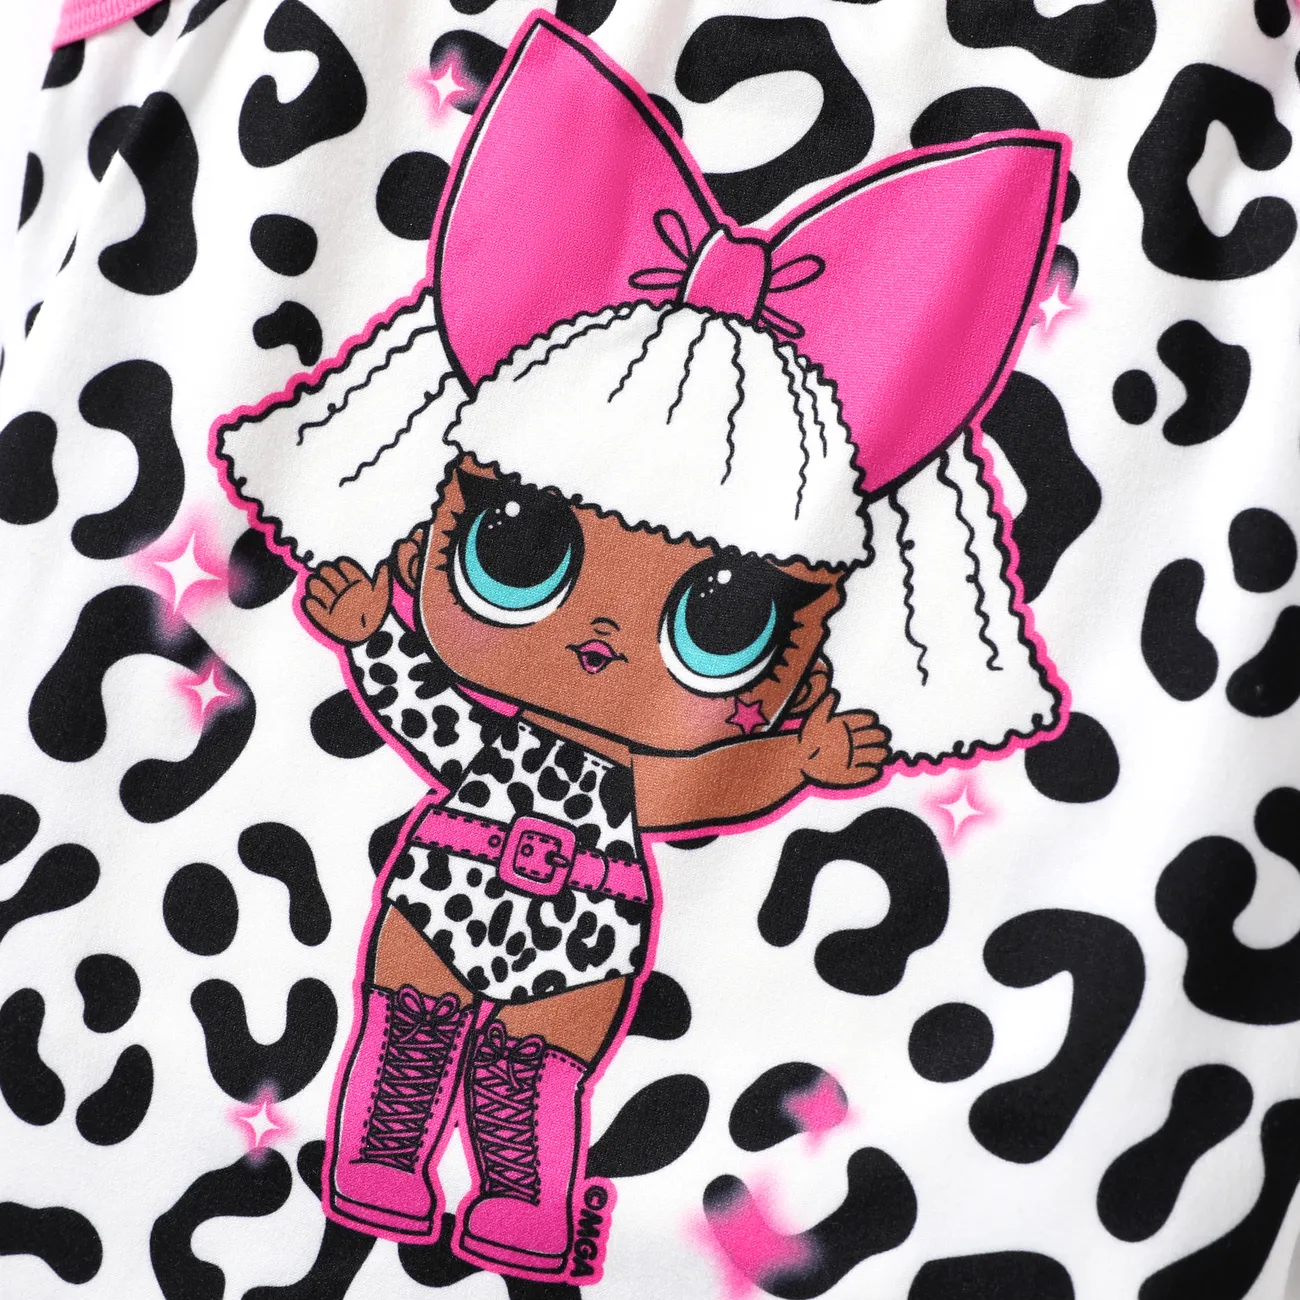 L.O.L. SURPRISE! 2pcs Toddler/Kid Girl Tee and Tyedyed/Leopard Print  Dress Set PINK-1 big image 1